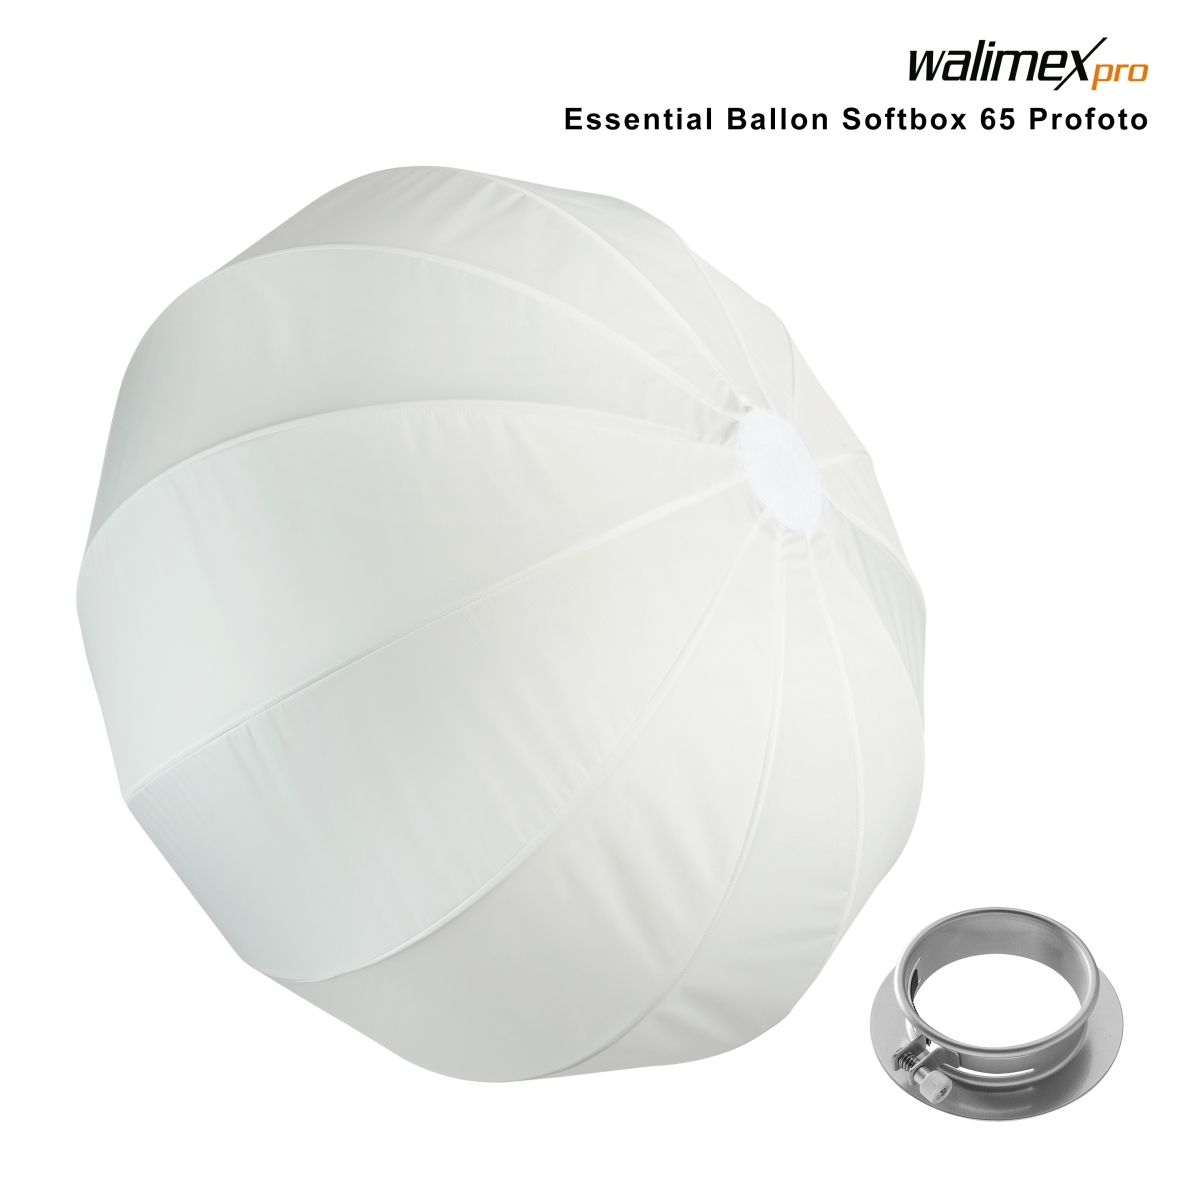 Walimex pro Essential Ballon Softbox 65 Profoto